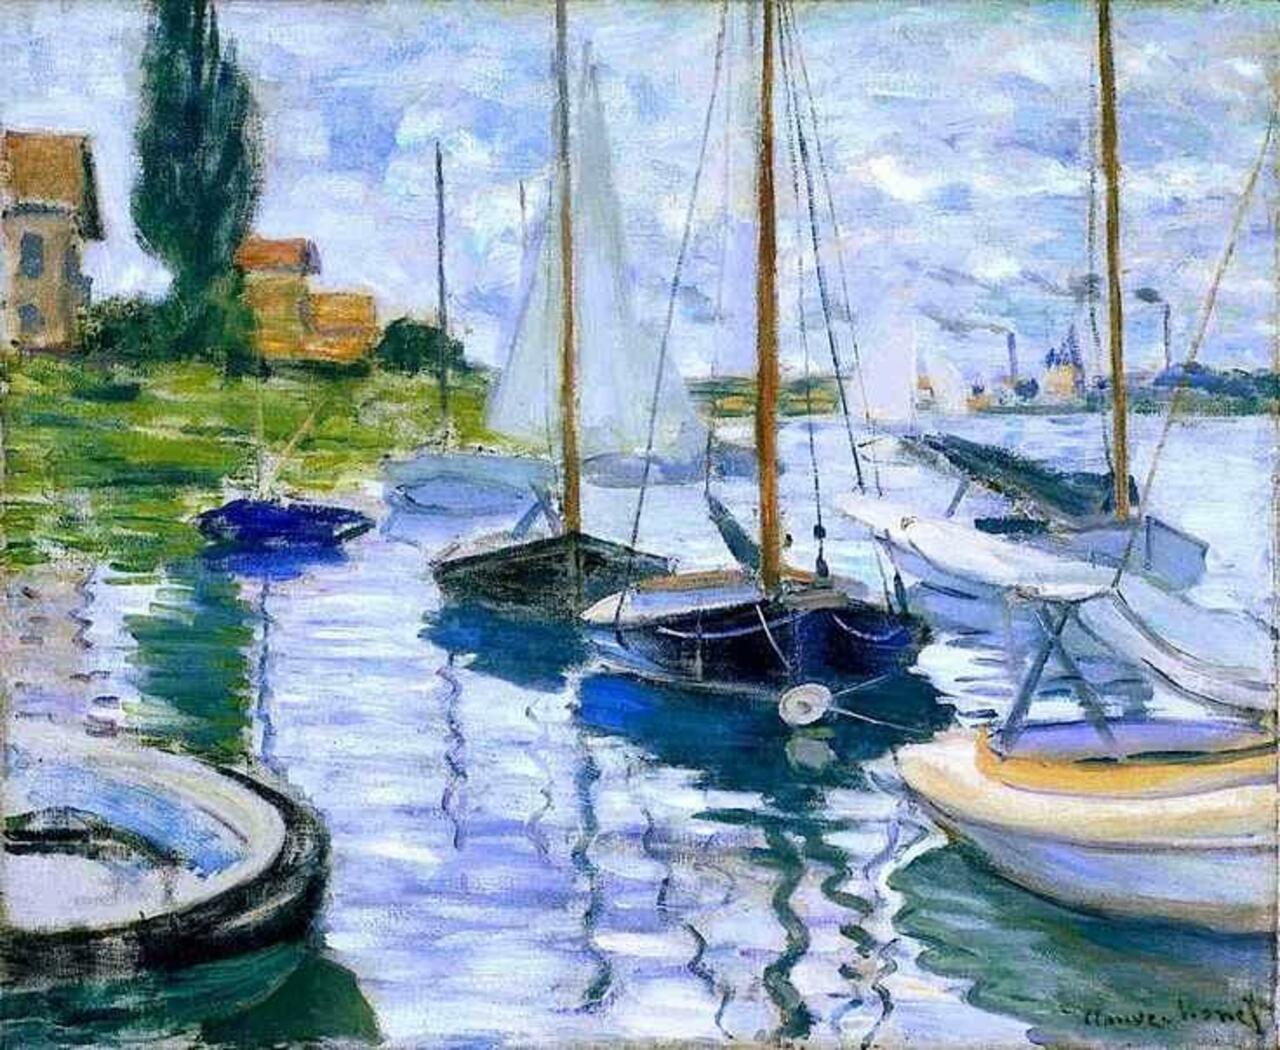 RT @mjesusgz Boat at rest, at Petit-Gennevilliers by Claude #Monet - #pintura #art #artwit   #painting http://t.co/9lVPvTggpi #sailing